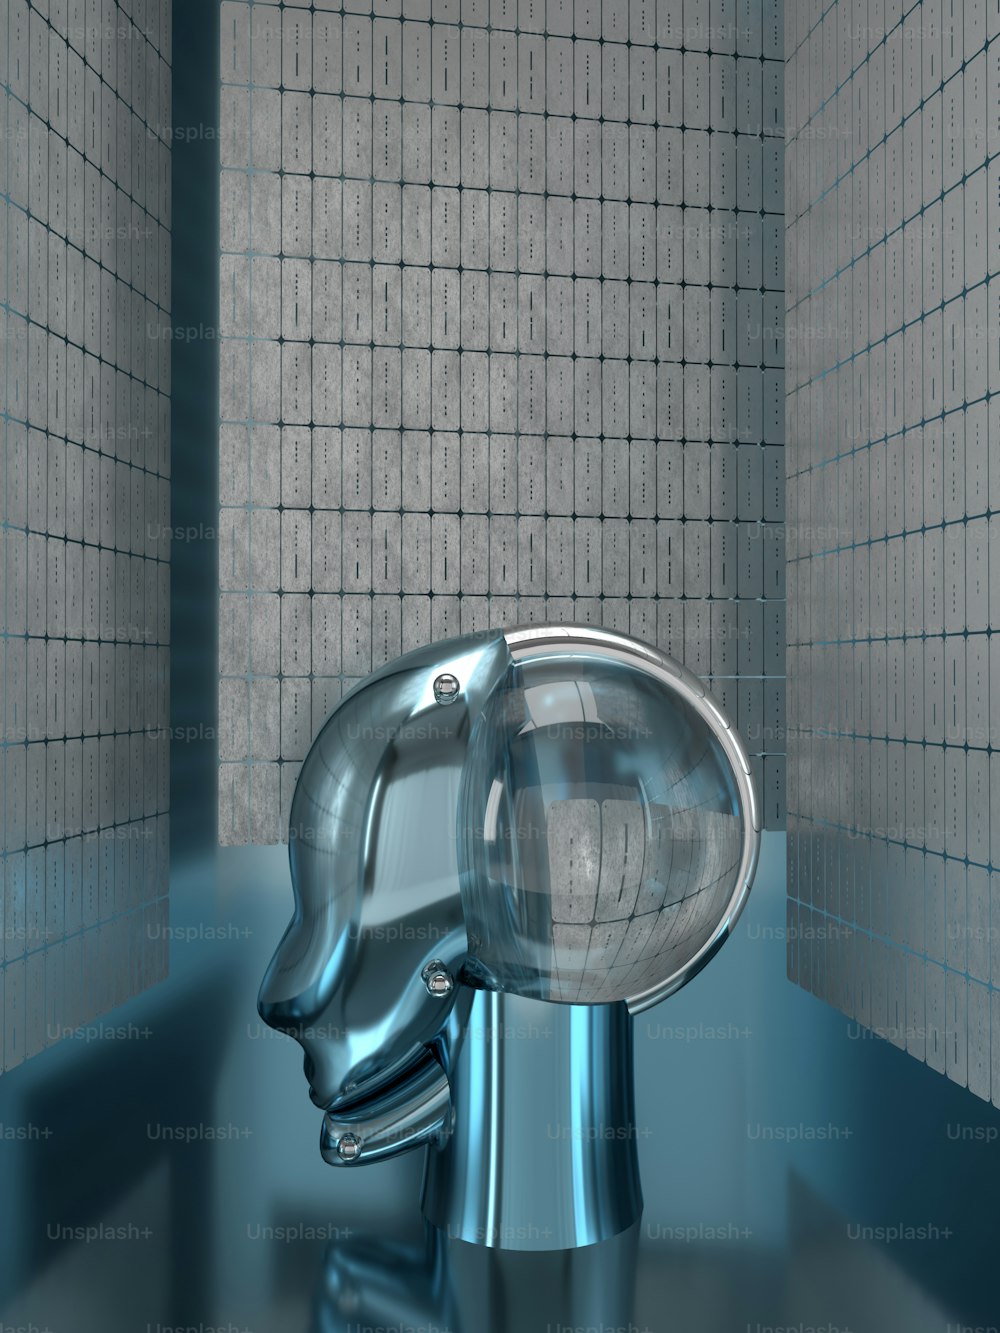 a silver sink in a blue tiled bathroom